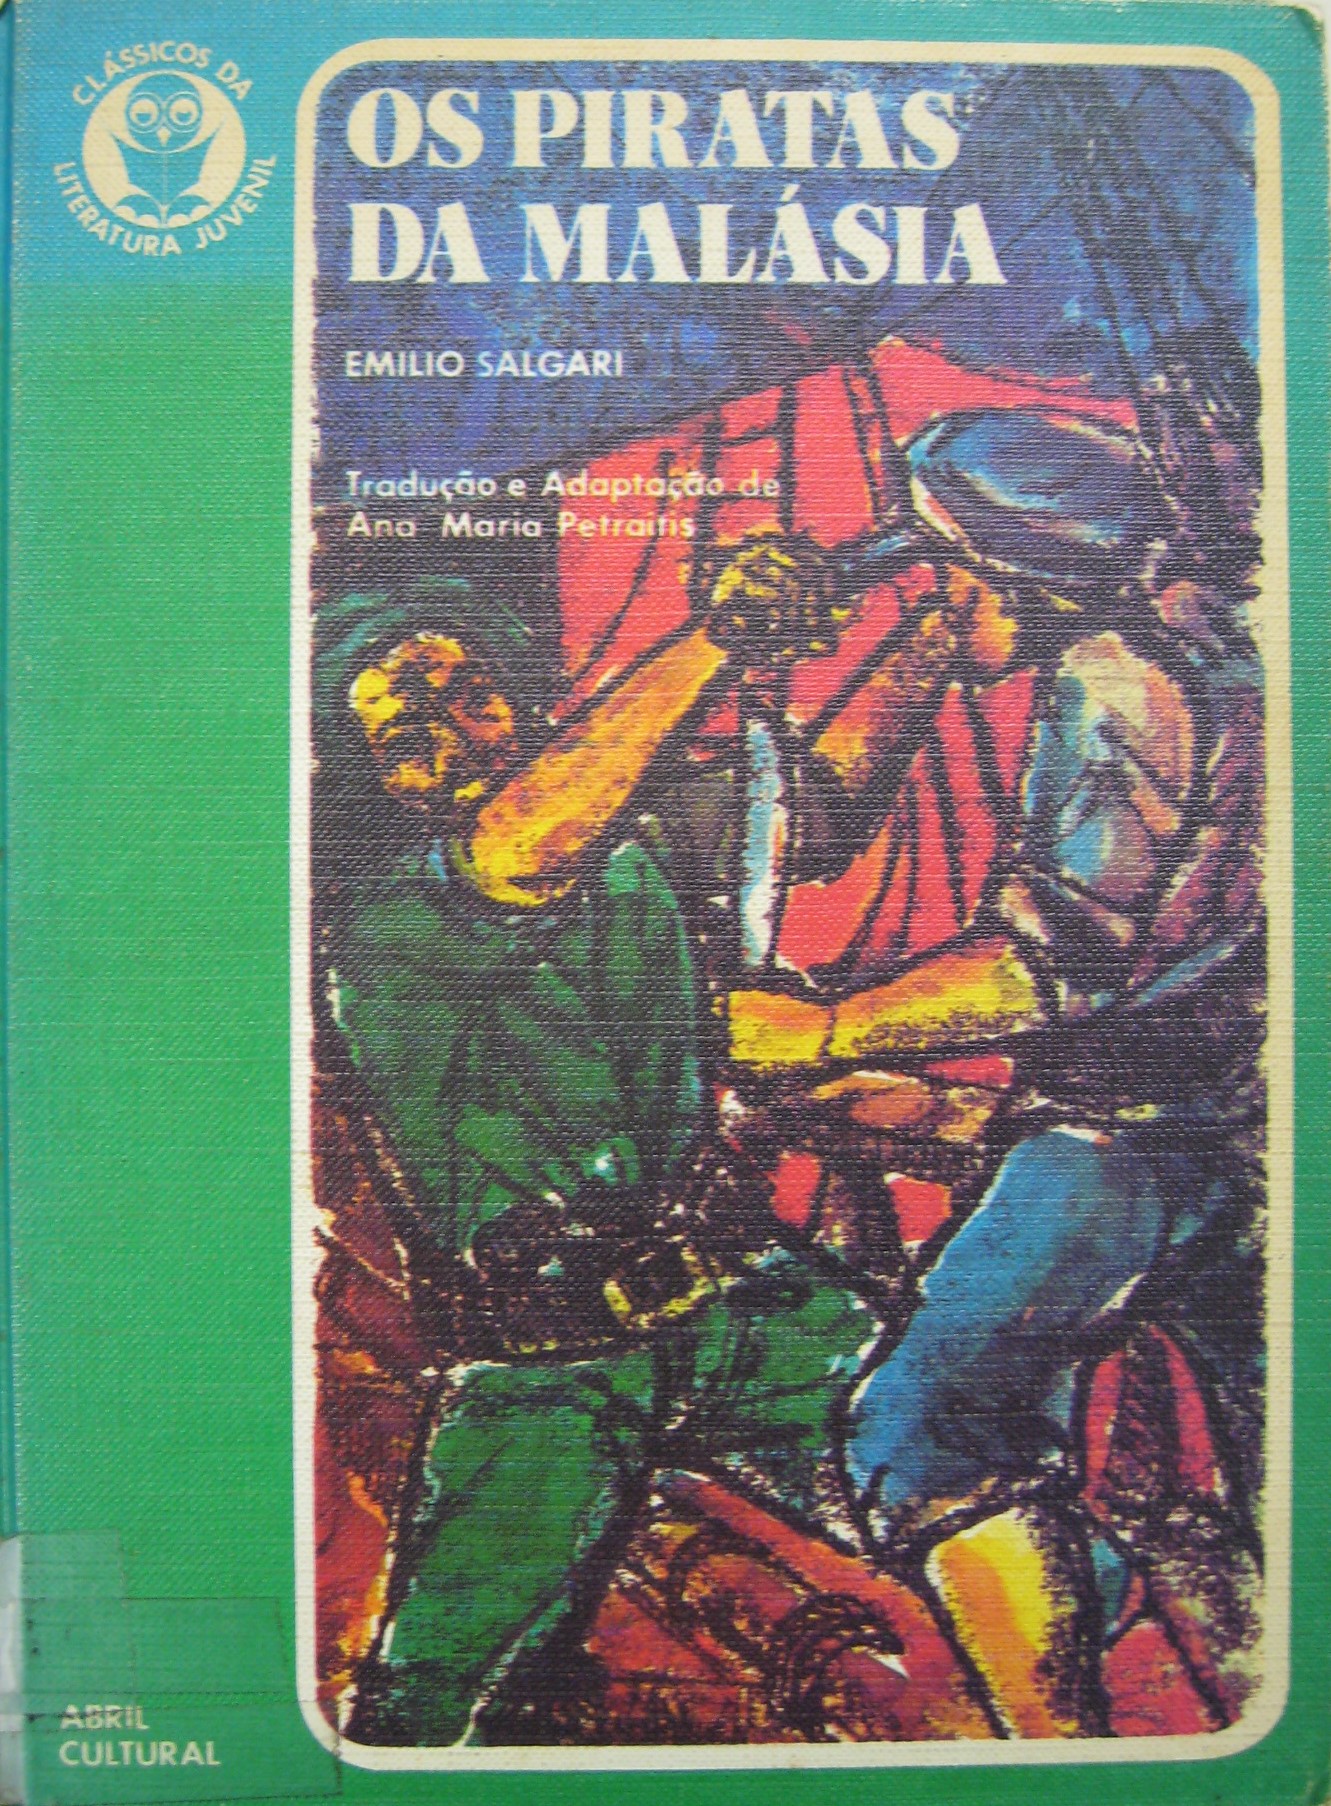 https://www.literaturabrasileira.ufsc.br/_images/obras/os_piratas_da_malasia.jpg